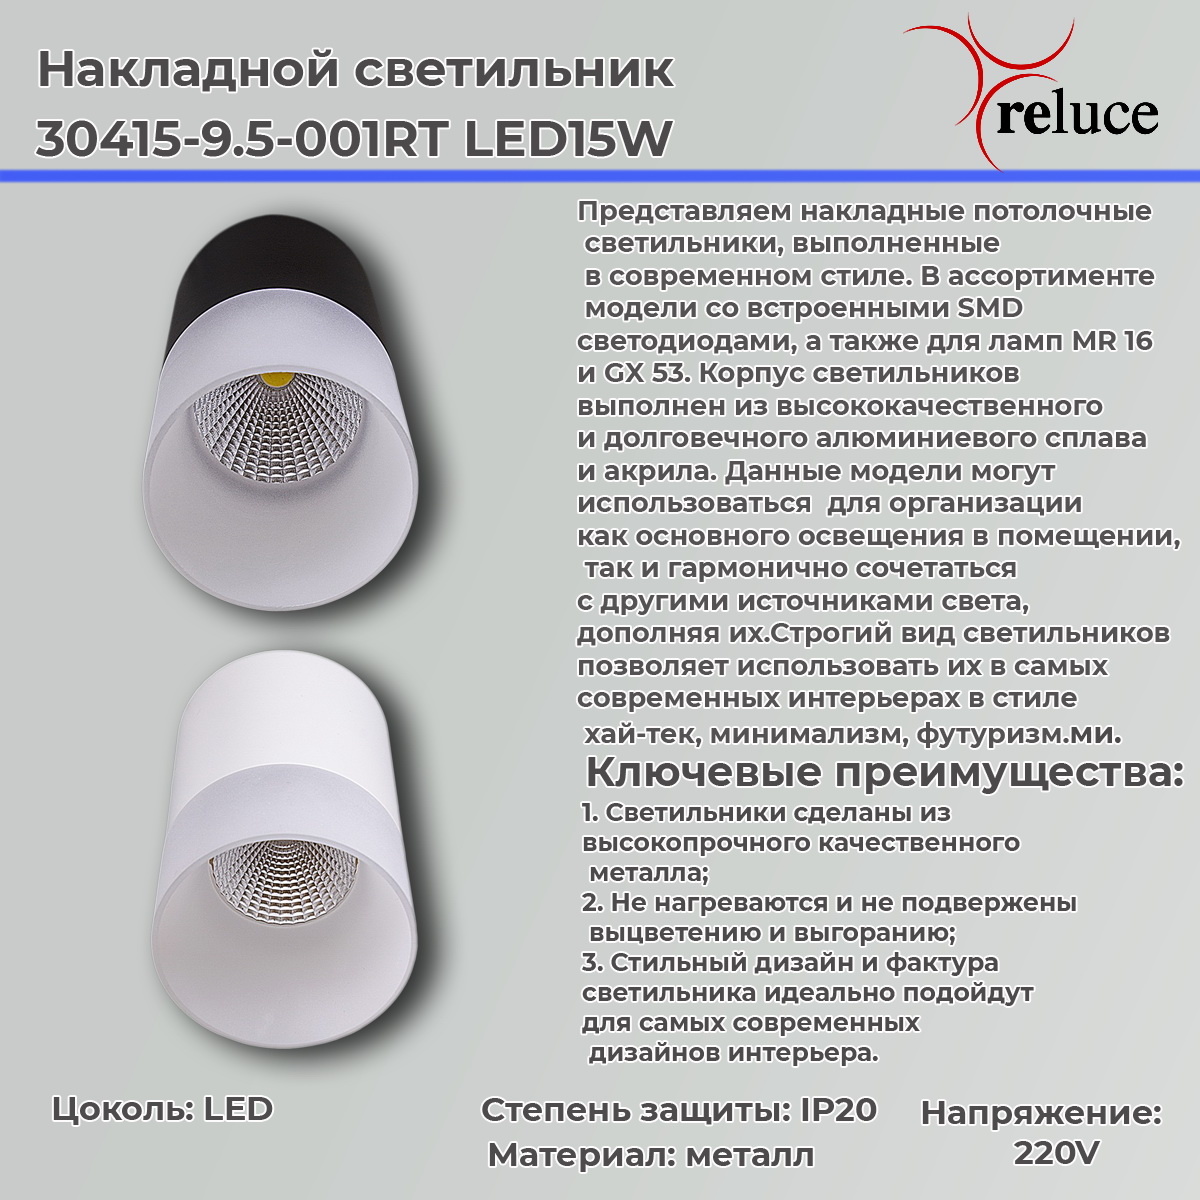 Накладной светильник Reluce 30415-9.5-001RT LED15W WT